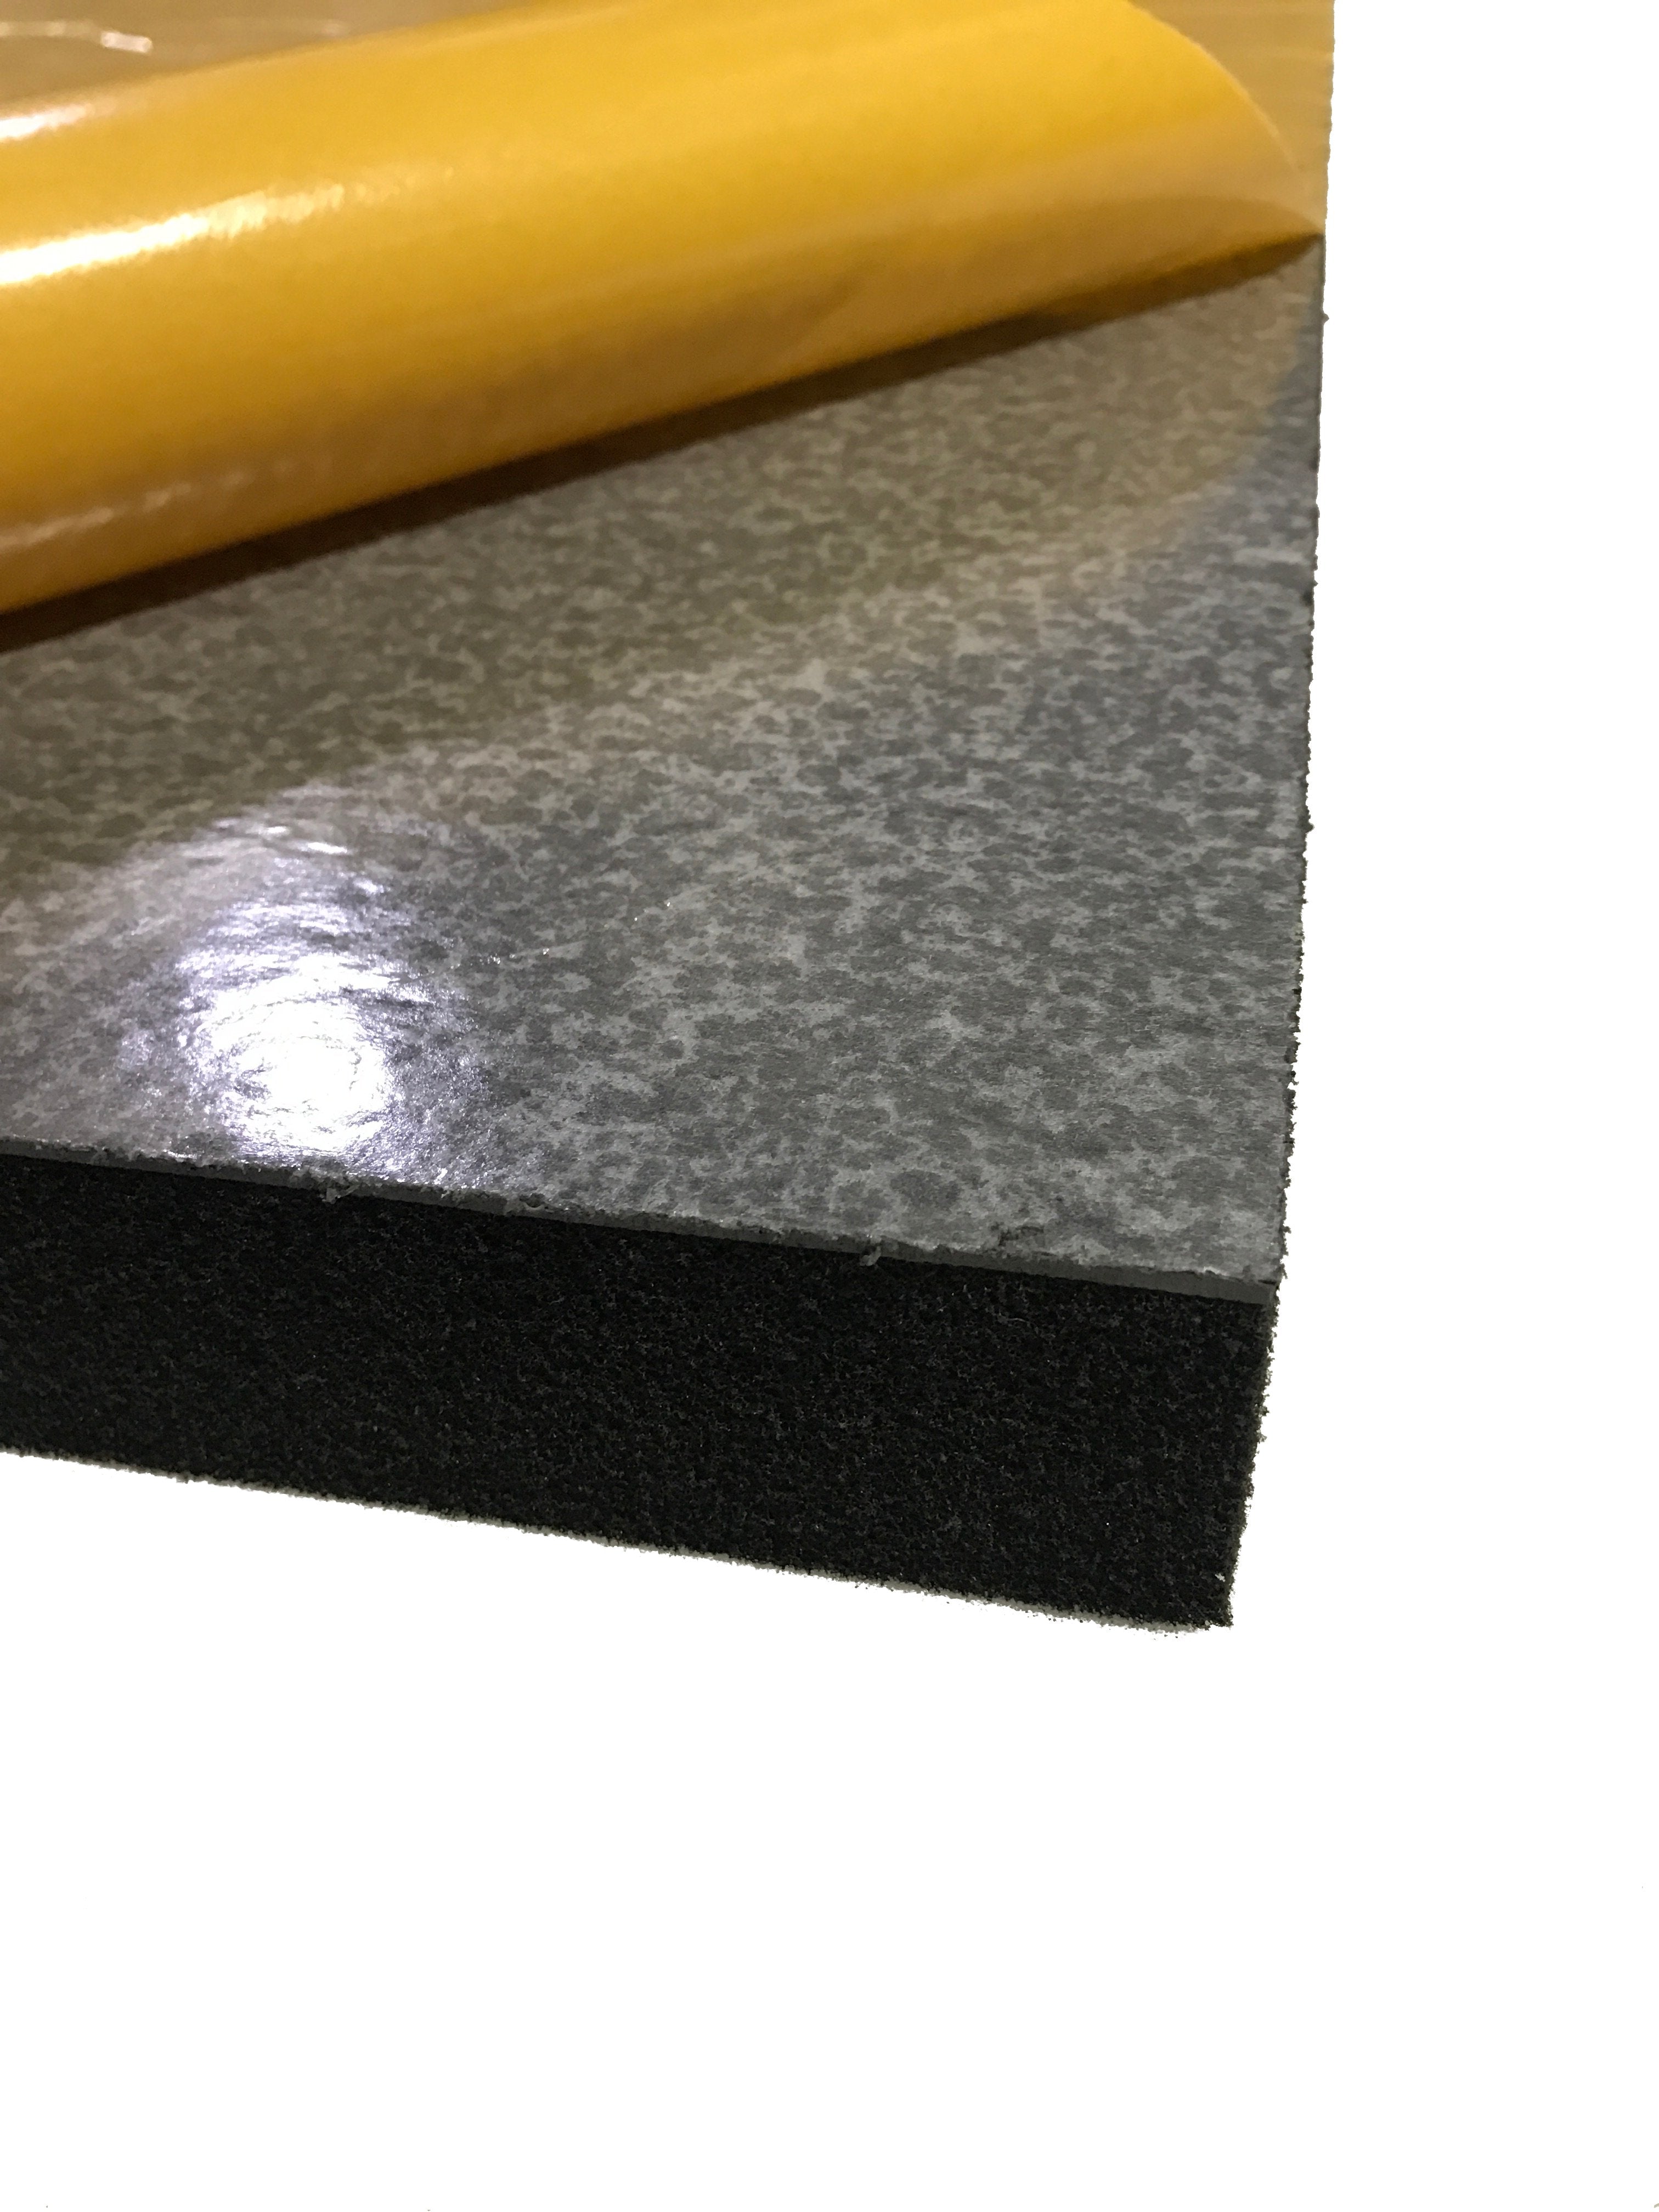 Silent Panel 10kg/50mm 600x1200- Barrier Foam Composite Acoustic Panel Adhesive Backed - Advanced Acoustics